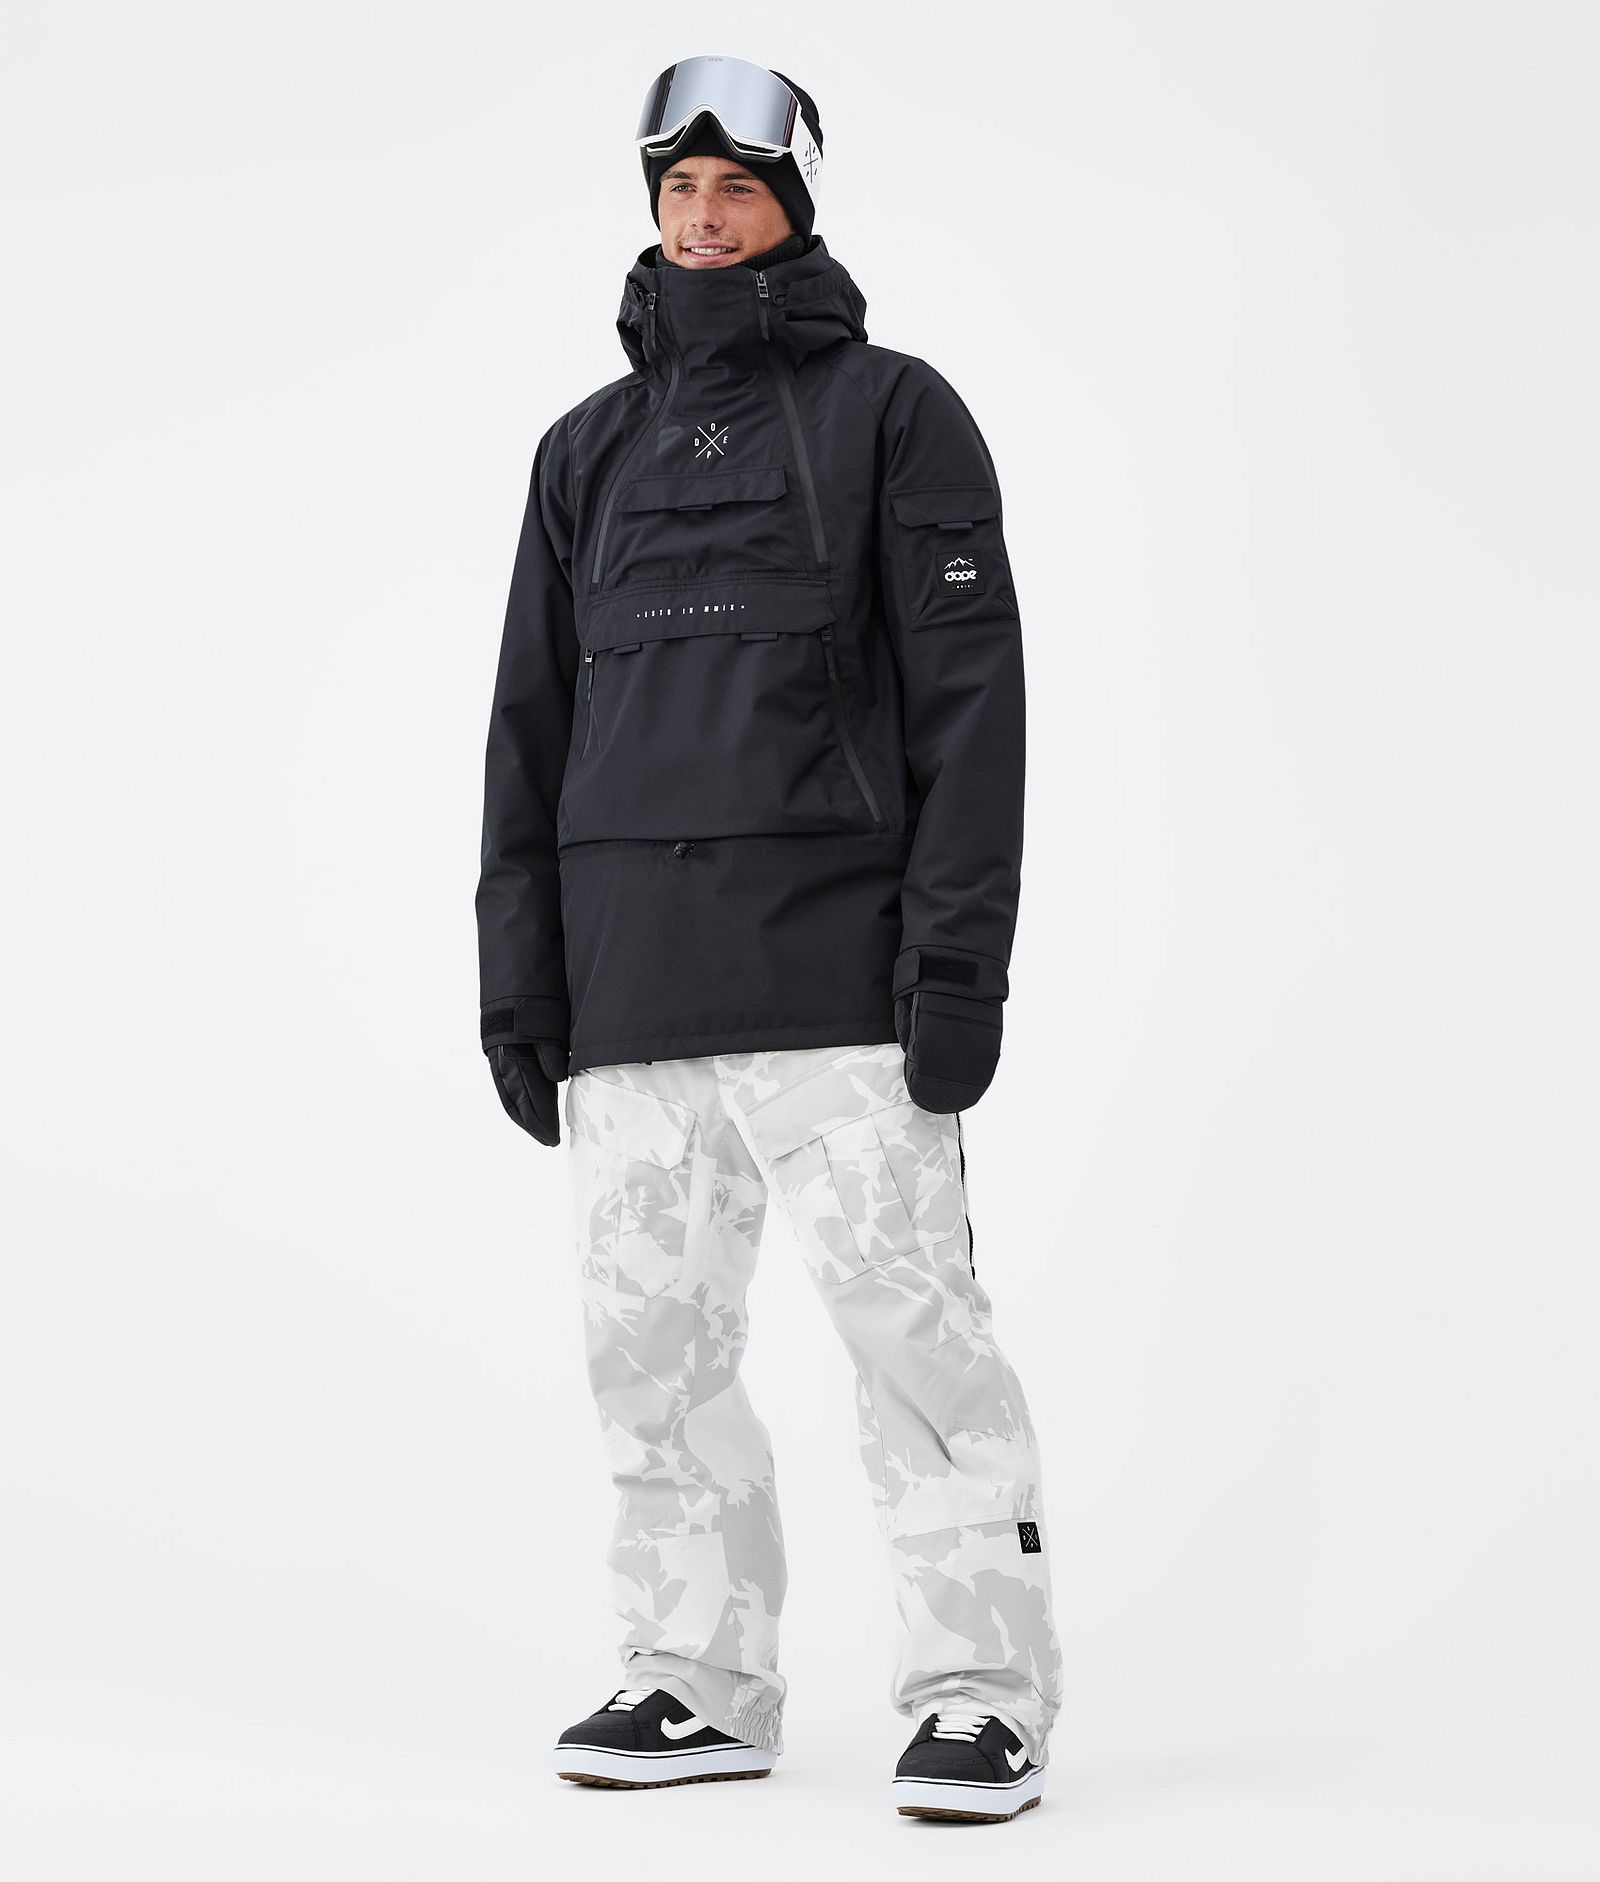 Dope Antek Pantaloni Snowboard Uomo Grey Camo